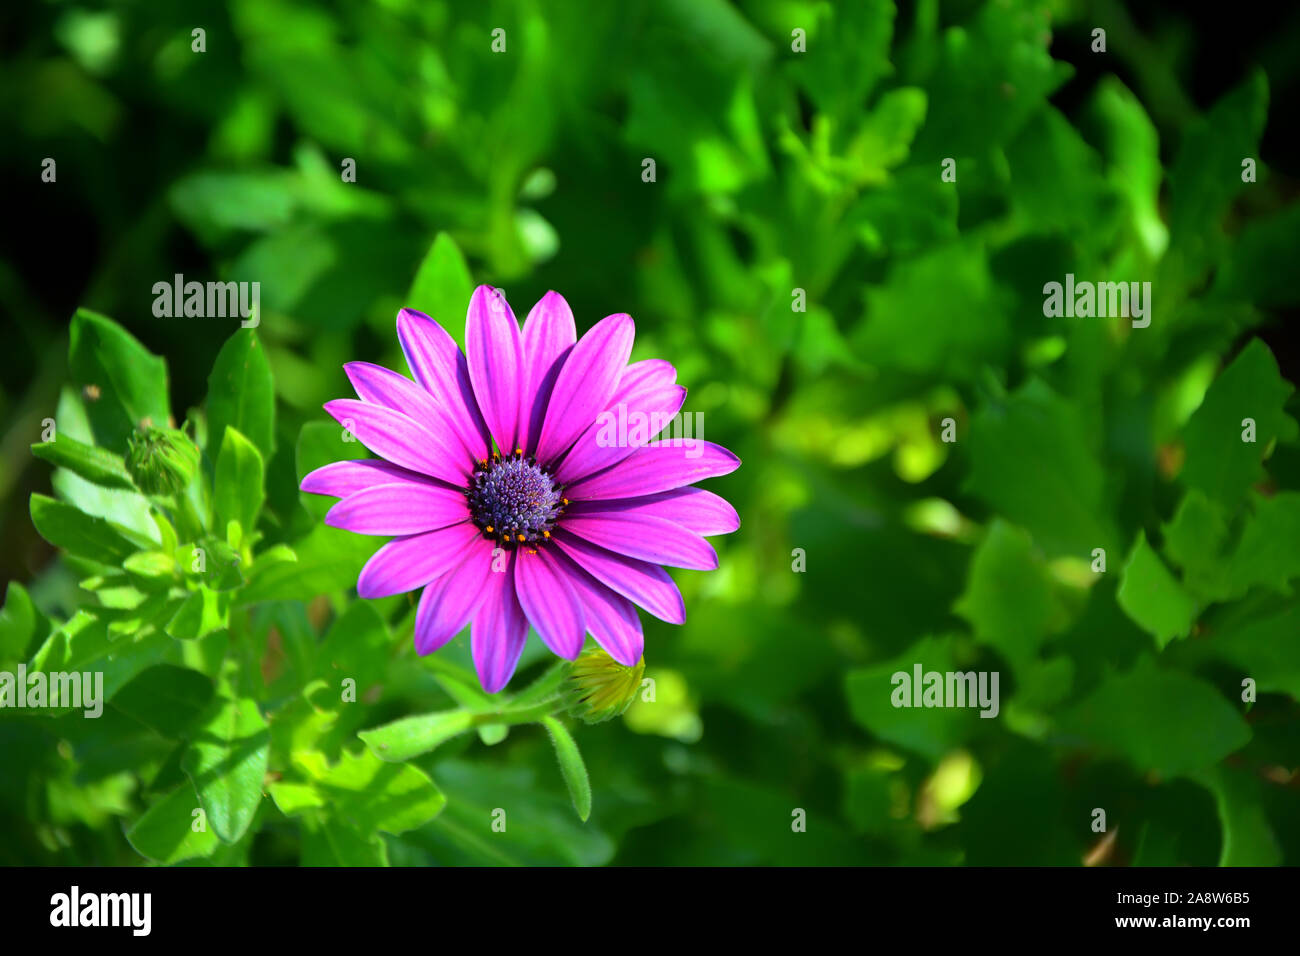 A beautiful bright purple daisy flowers on green grass background. Close up purple daisy. Stock Photo